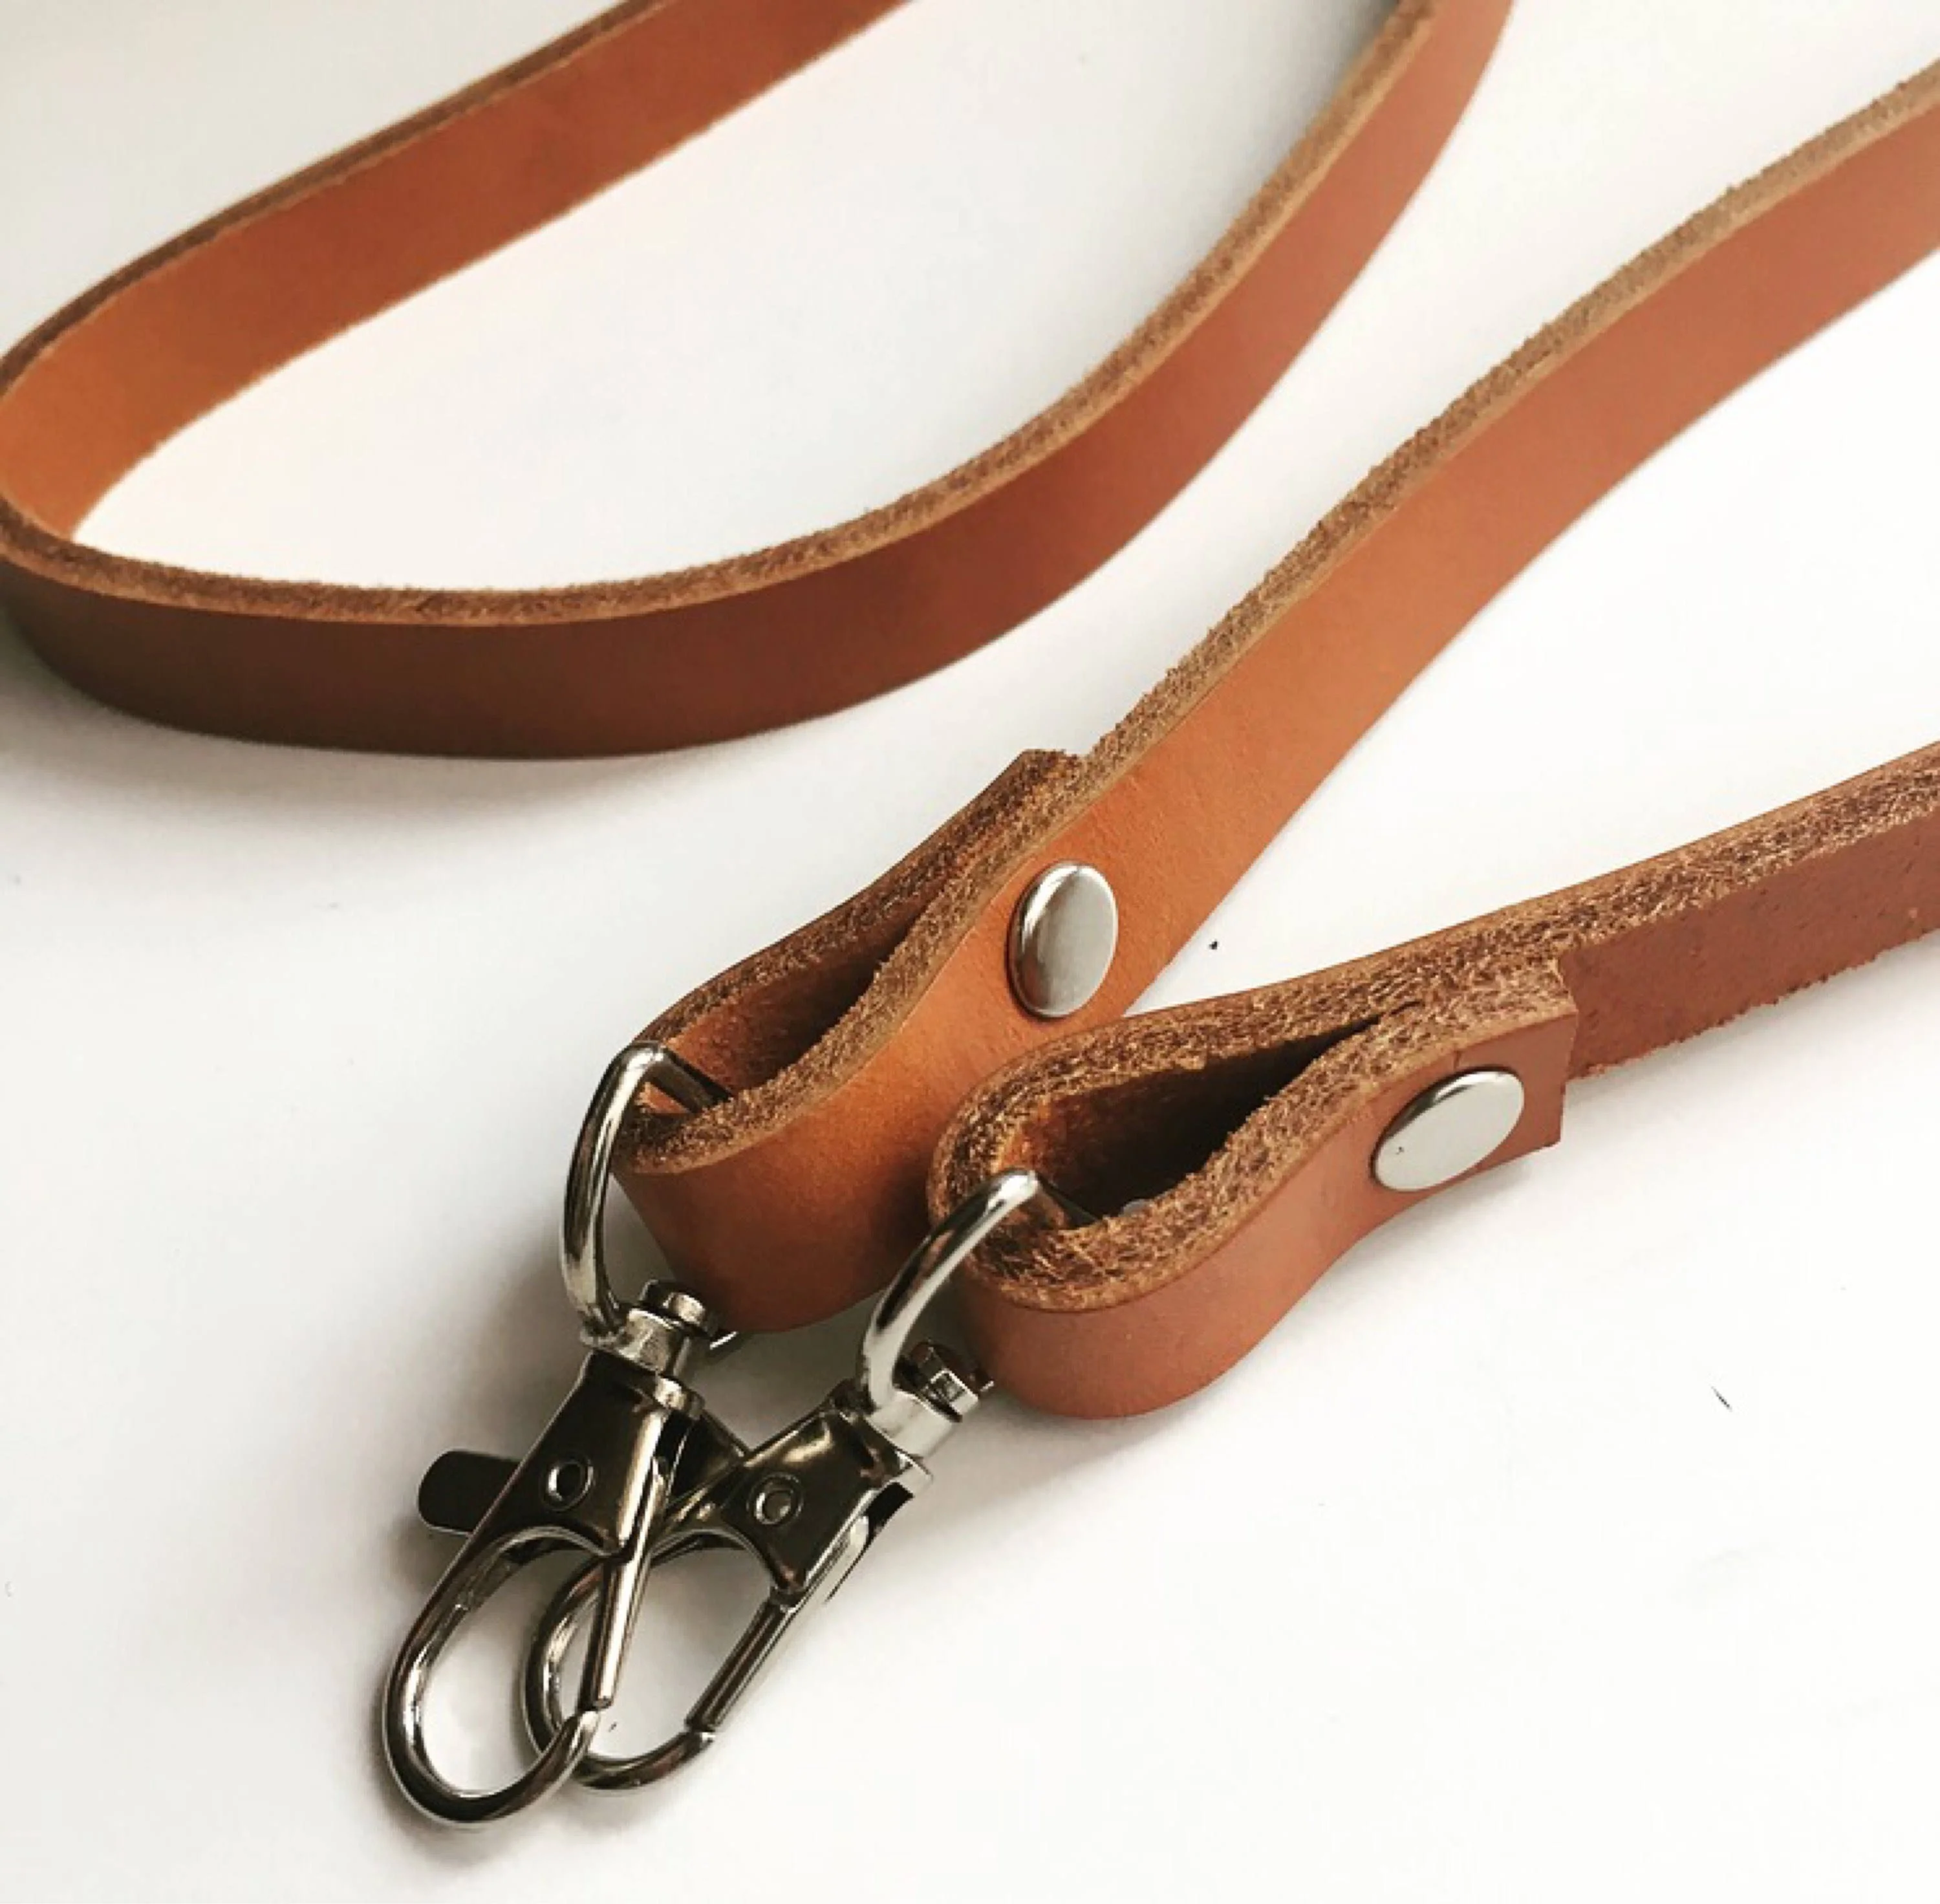 High Quality Craft Leather Handles Shoulder Strap For Bag - Buy Leather ...